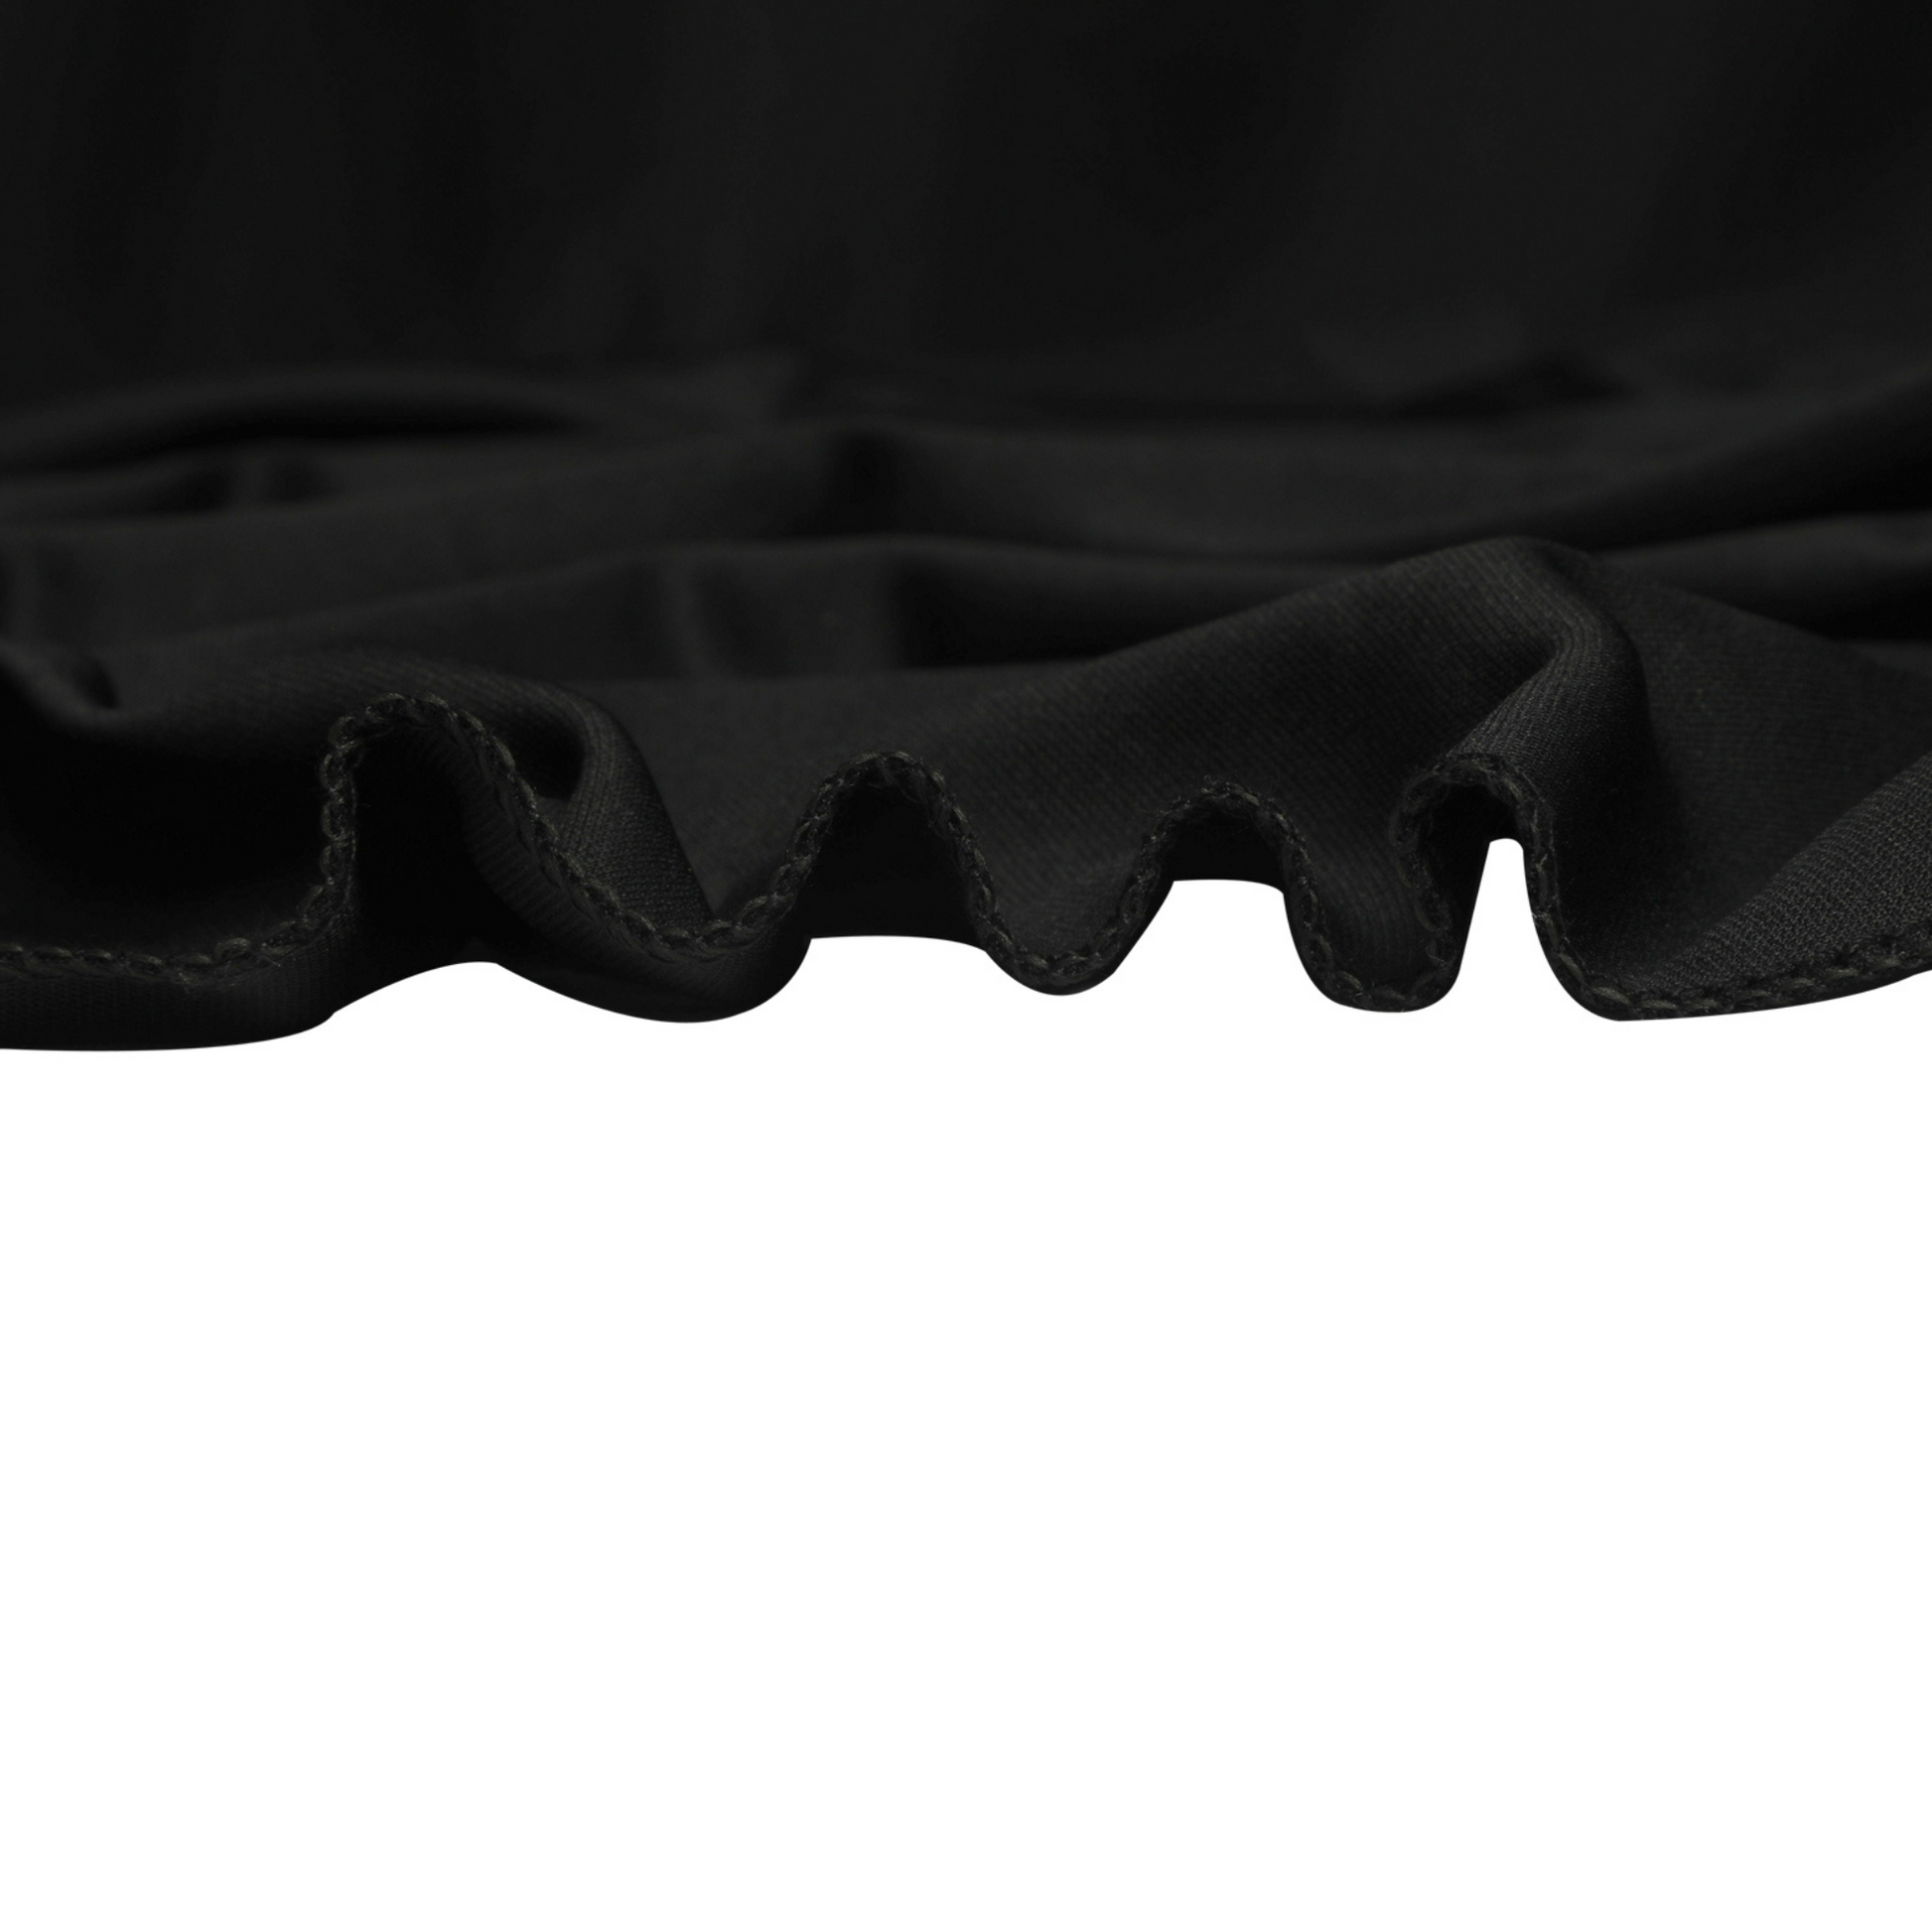 Scuba 120" Round Tablecloth - Black